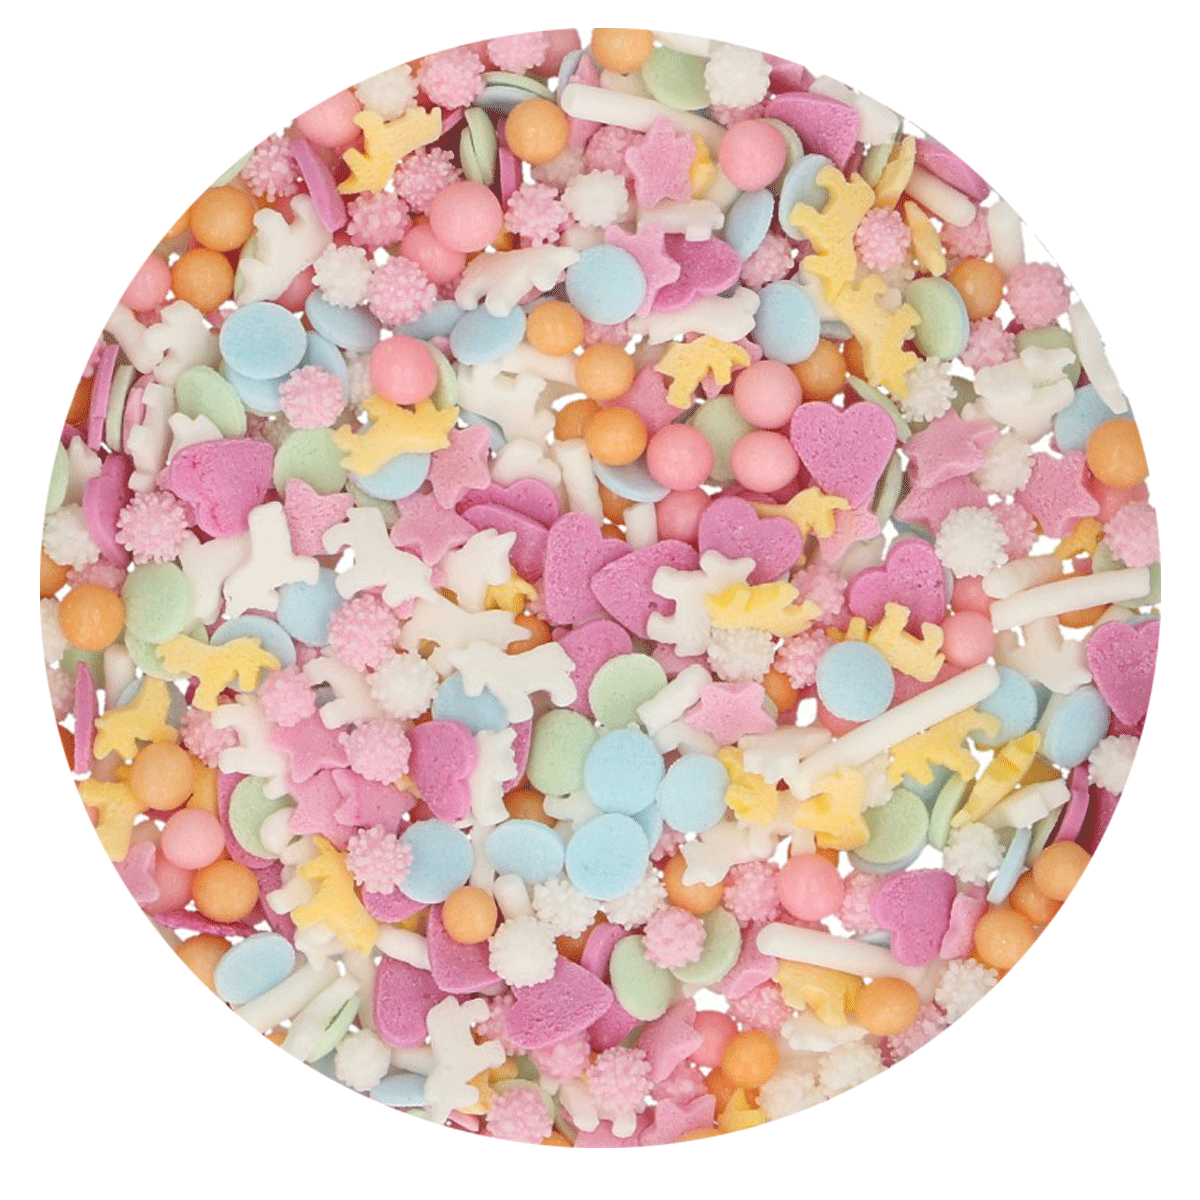 FunCakes Sprinkle Mix 50γρ -PASTEL UNICORN MEDLEY - Μείγμα Ζαχαρωτών - Μονόκερος - Παστέλ χρώματα